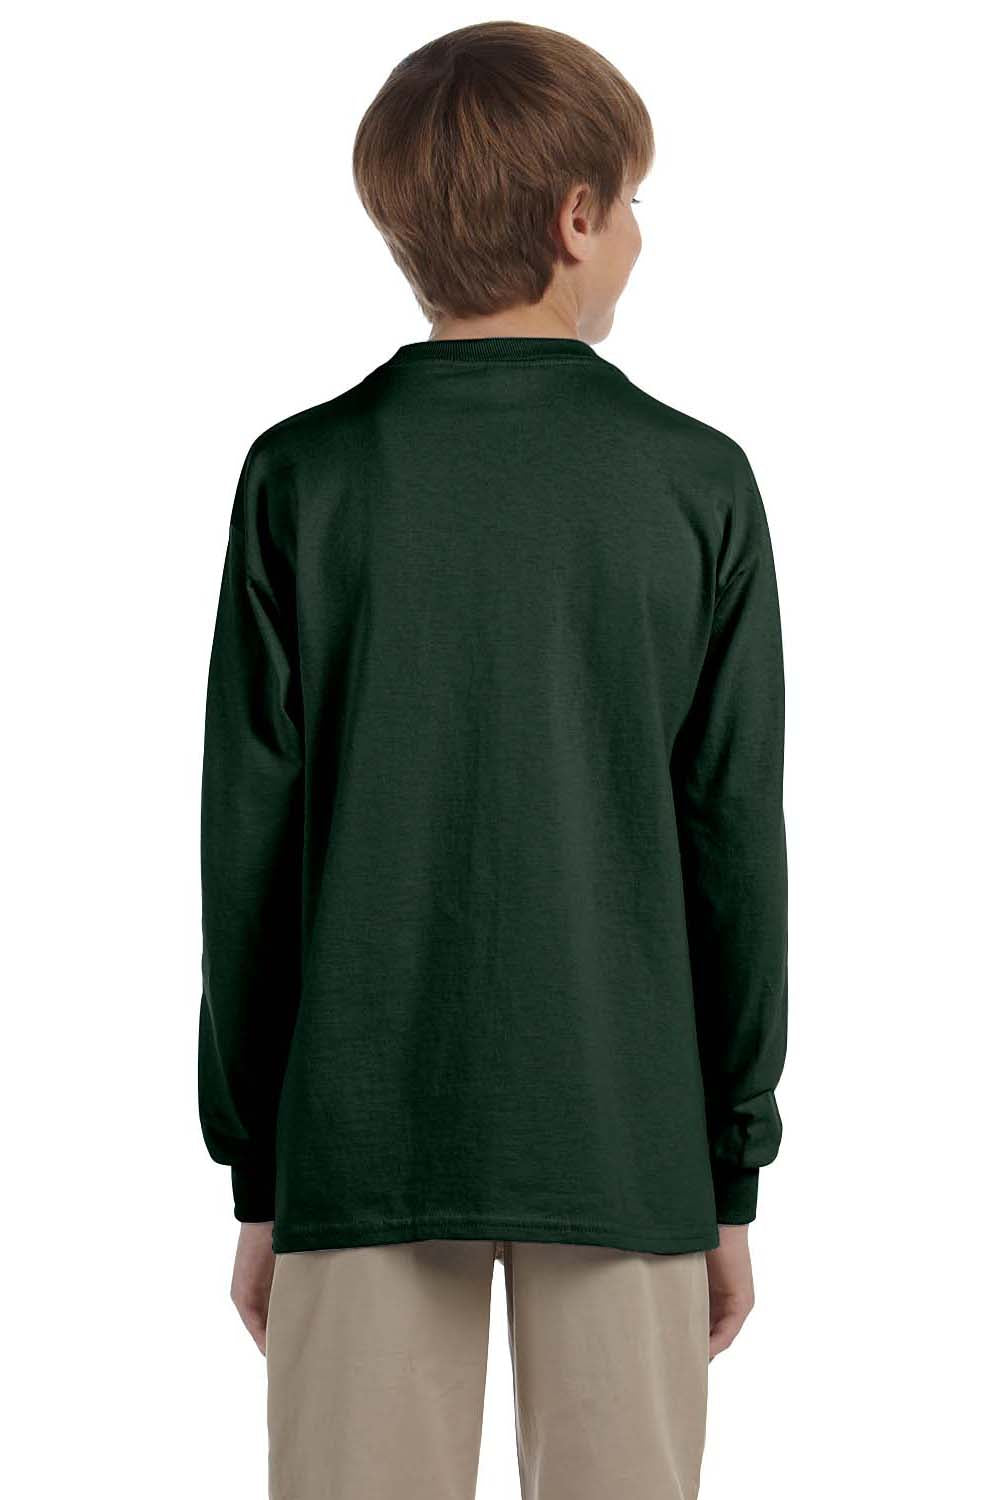 Jerzees 29BL Youth Dri-Power Moisture Wicking Long Sleeve Crewneck T-Shirt Forest Green Back